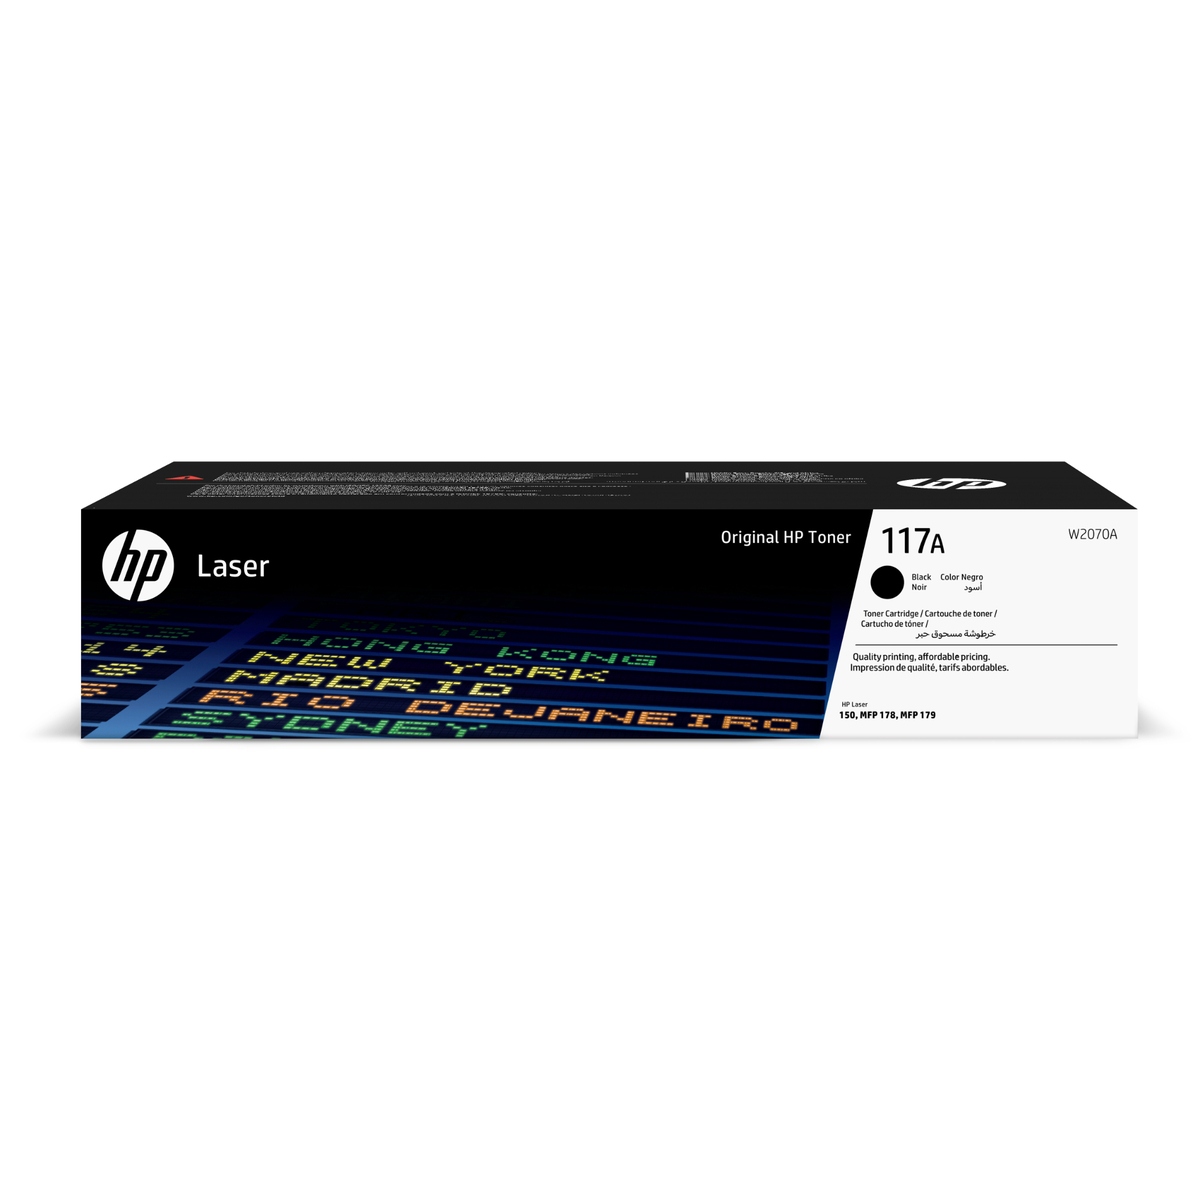 HP 117A Original Laser Toner Cartridge (W2070A),Black